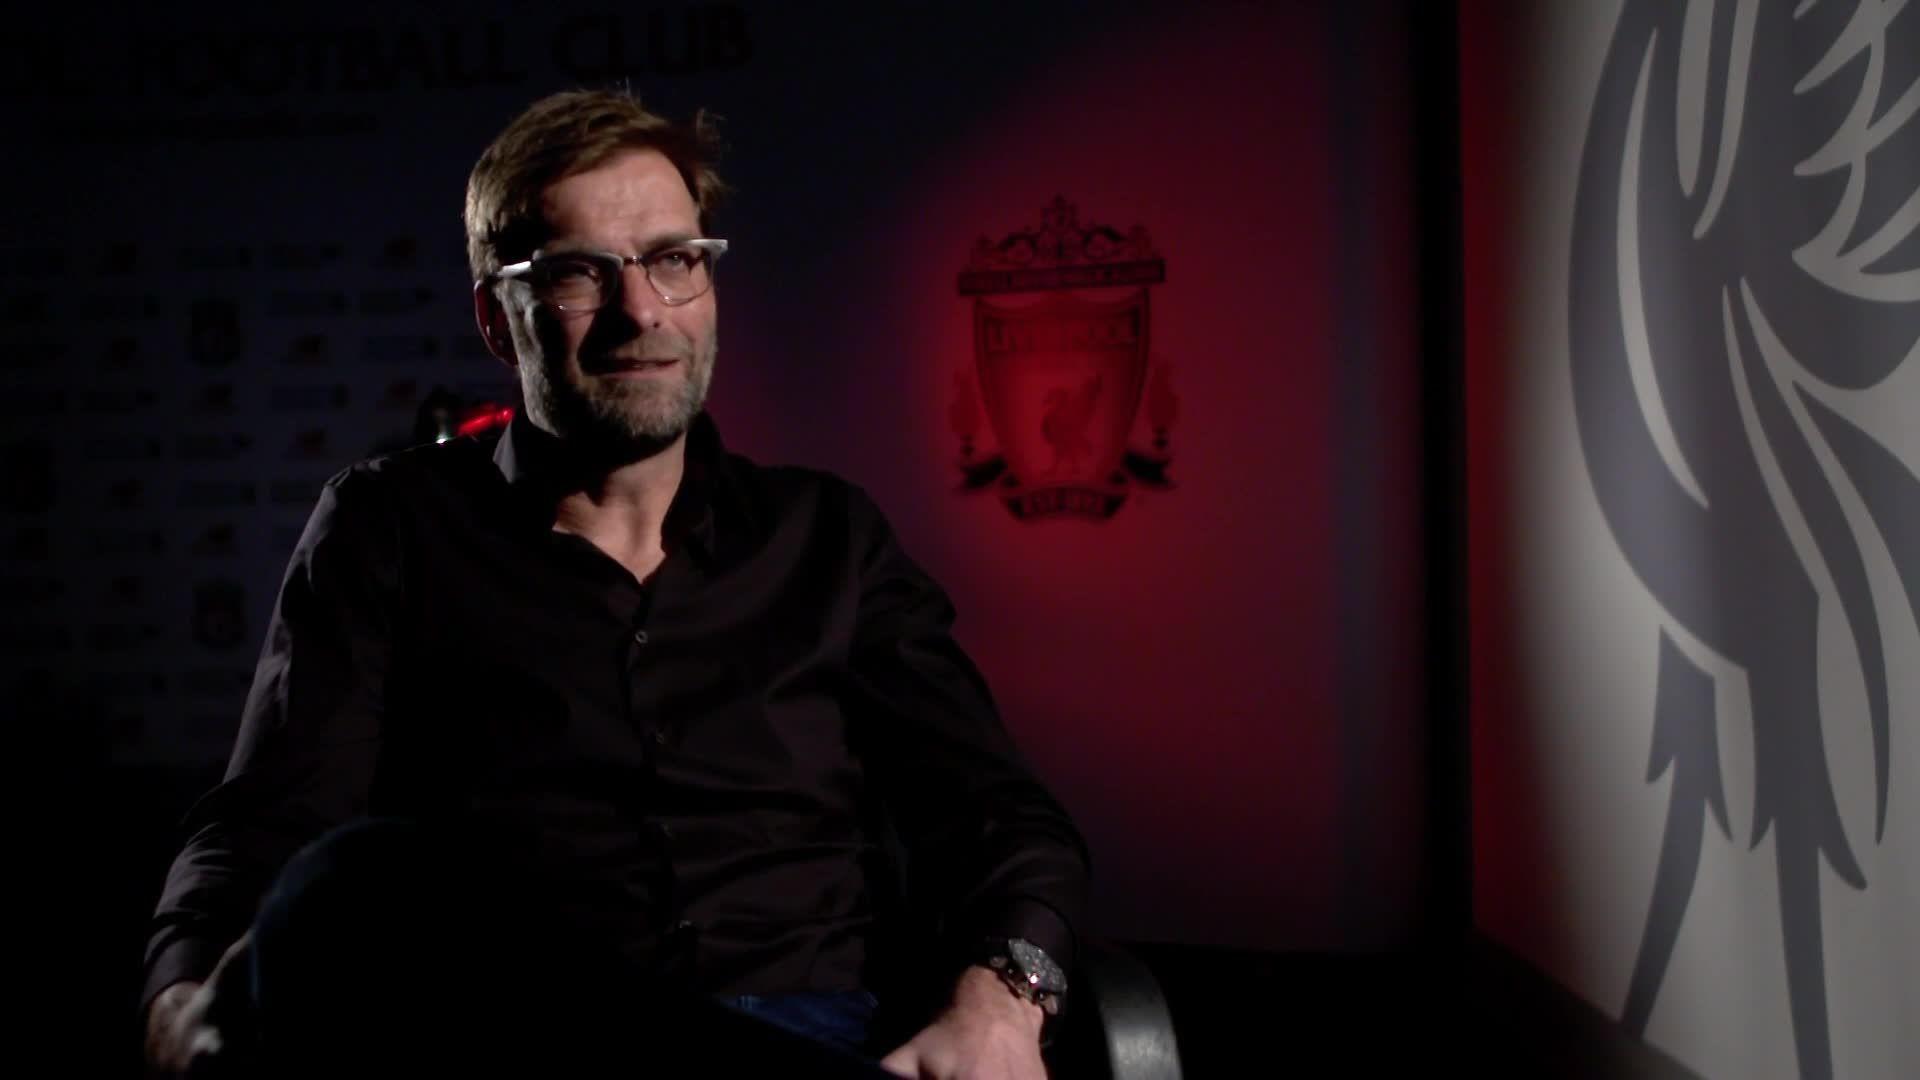 Jurgen Klopp interview: Liverpool manager on his Wembley return